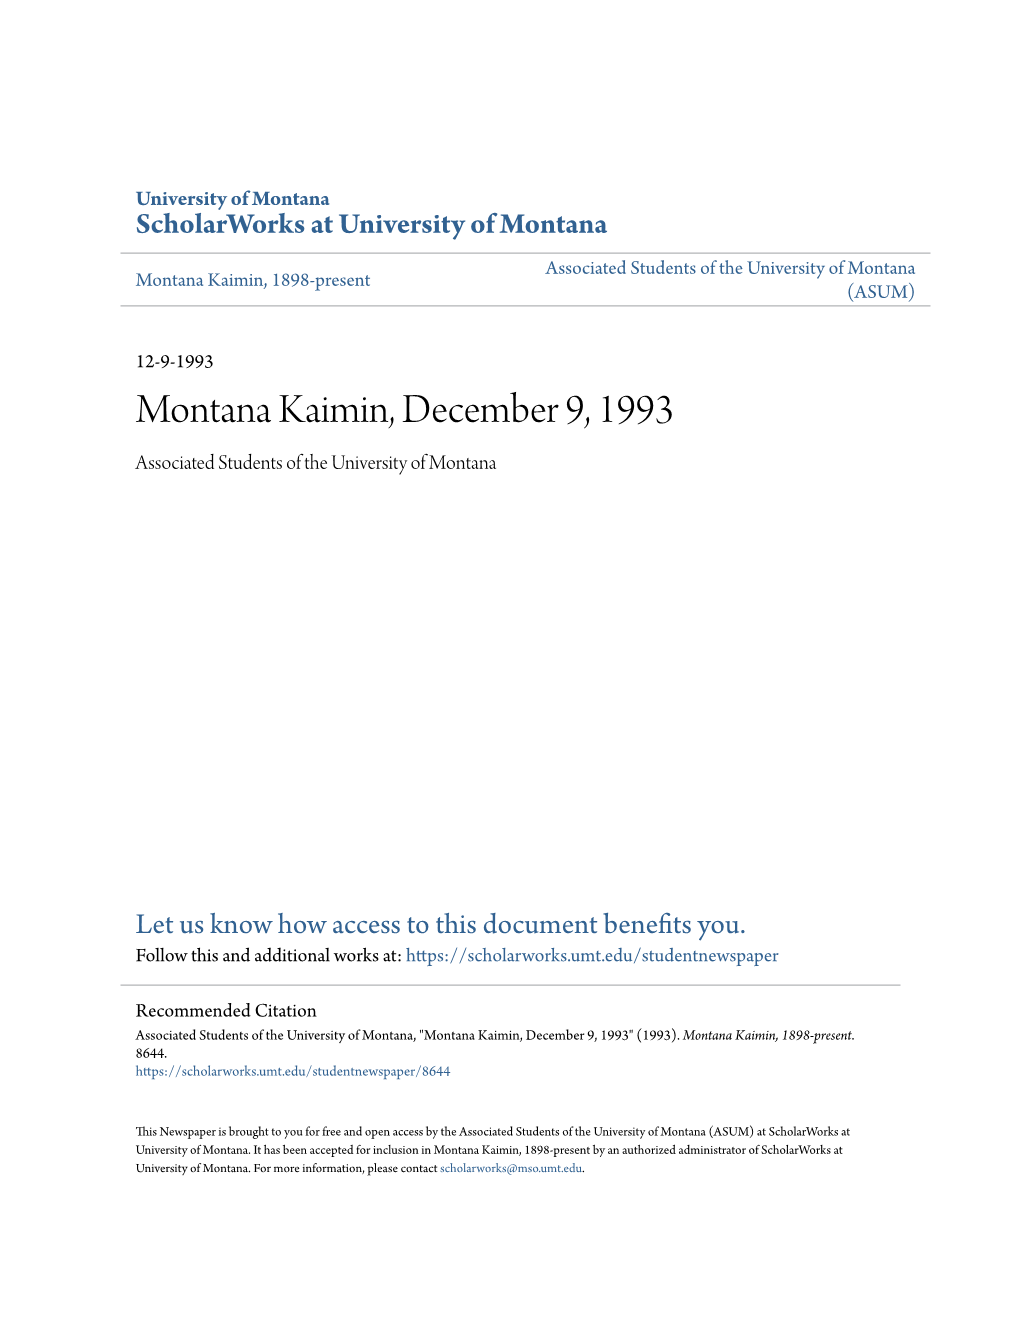 Montana Kaimin, December 9, 1993 Associated Students of the University of Montana